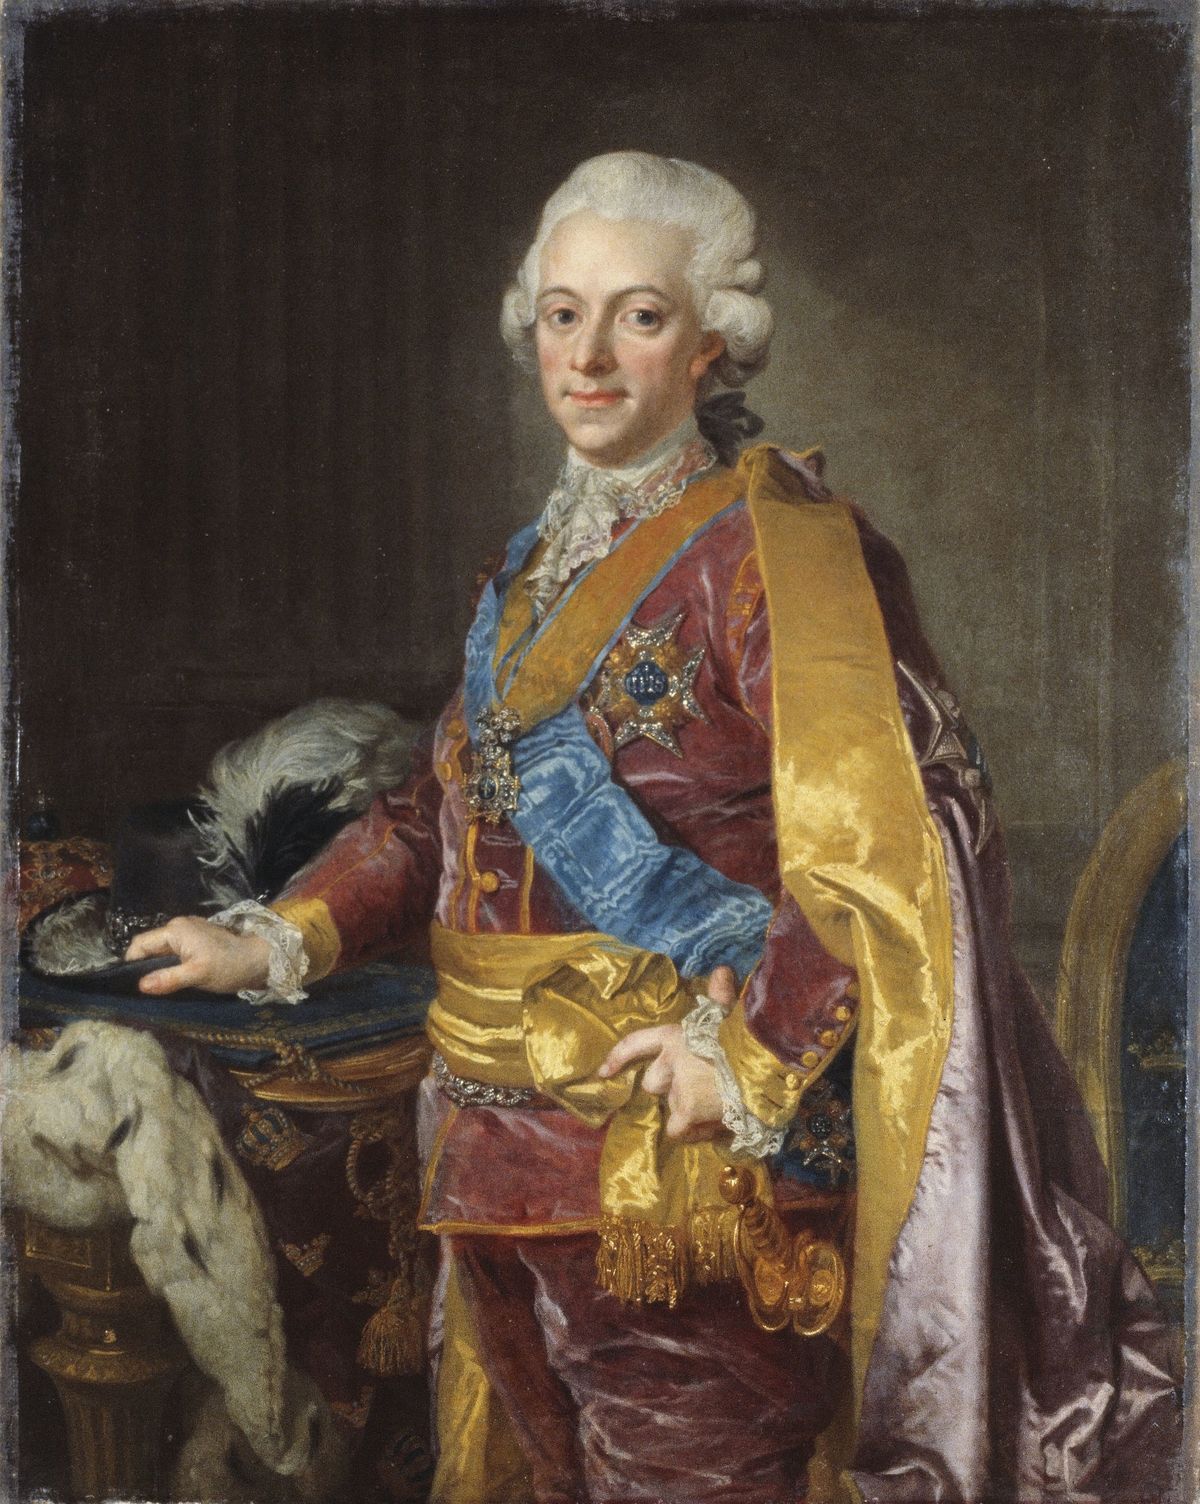 Lorens_Pasch_the_Younger_-_Gustav_III,_King_of_Sweden_1772-1792_-_Google_Art_Project.jpg